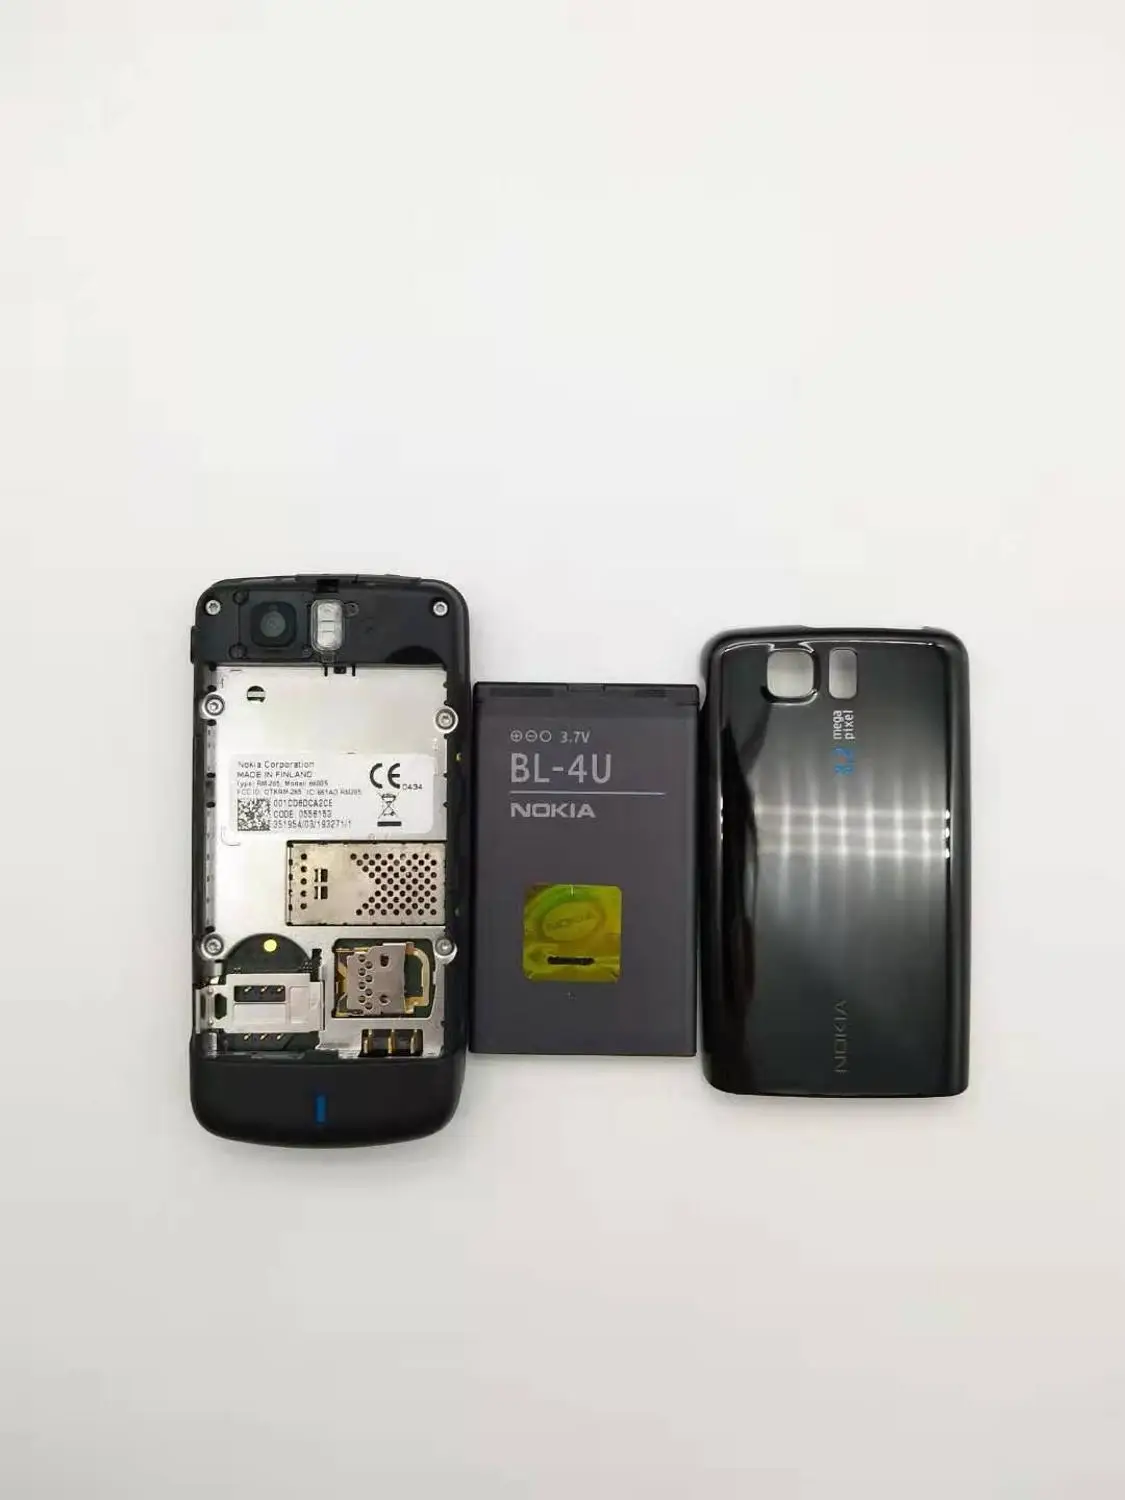 nokia 6600s refurbished original phone nokia 6600 slide refurbished cell phone black color in stock free global shipping